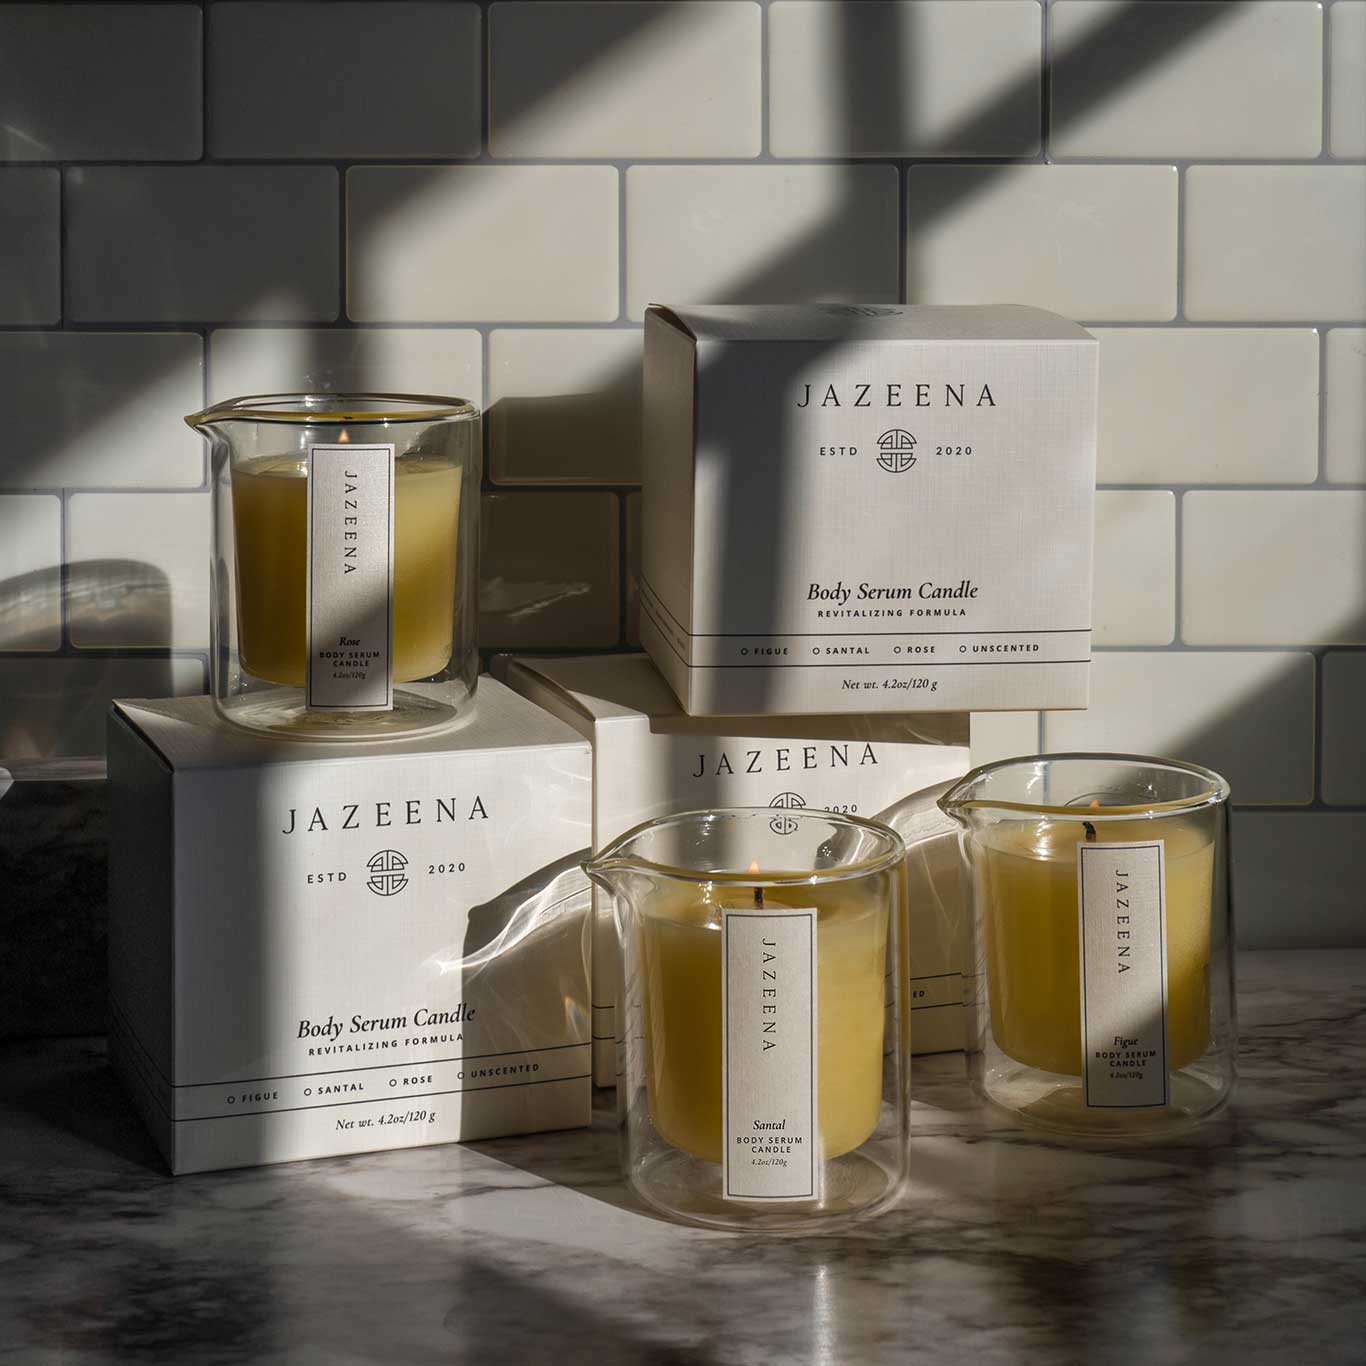 Jazeena Body Serum Candle Gift Collection set of three scents